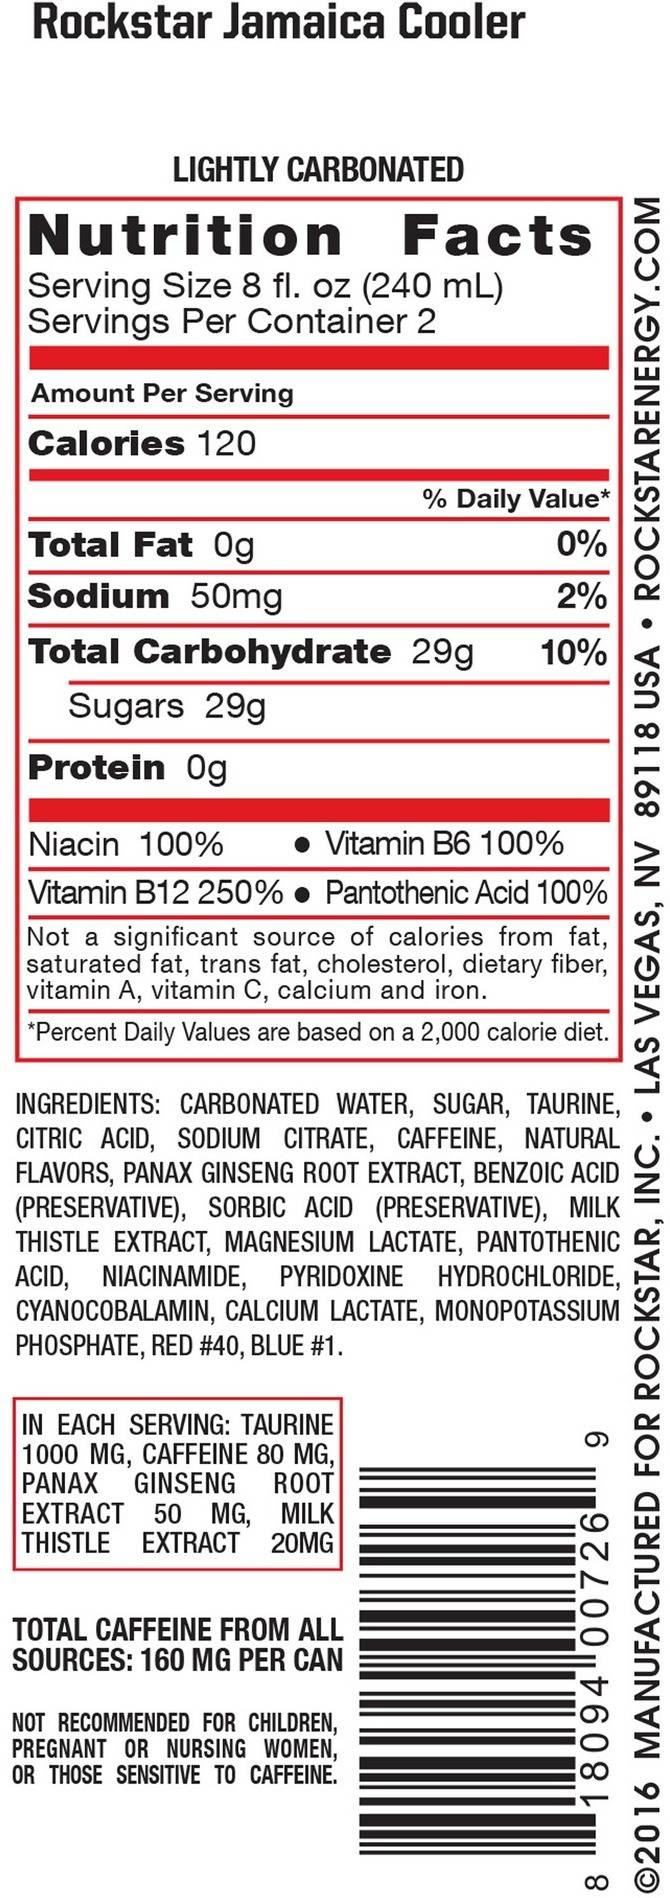 Image describing nutrition information for product Rockstar Jamaica Cooler